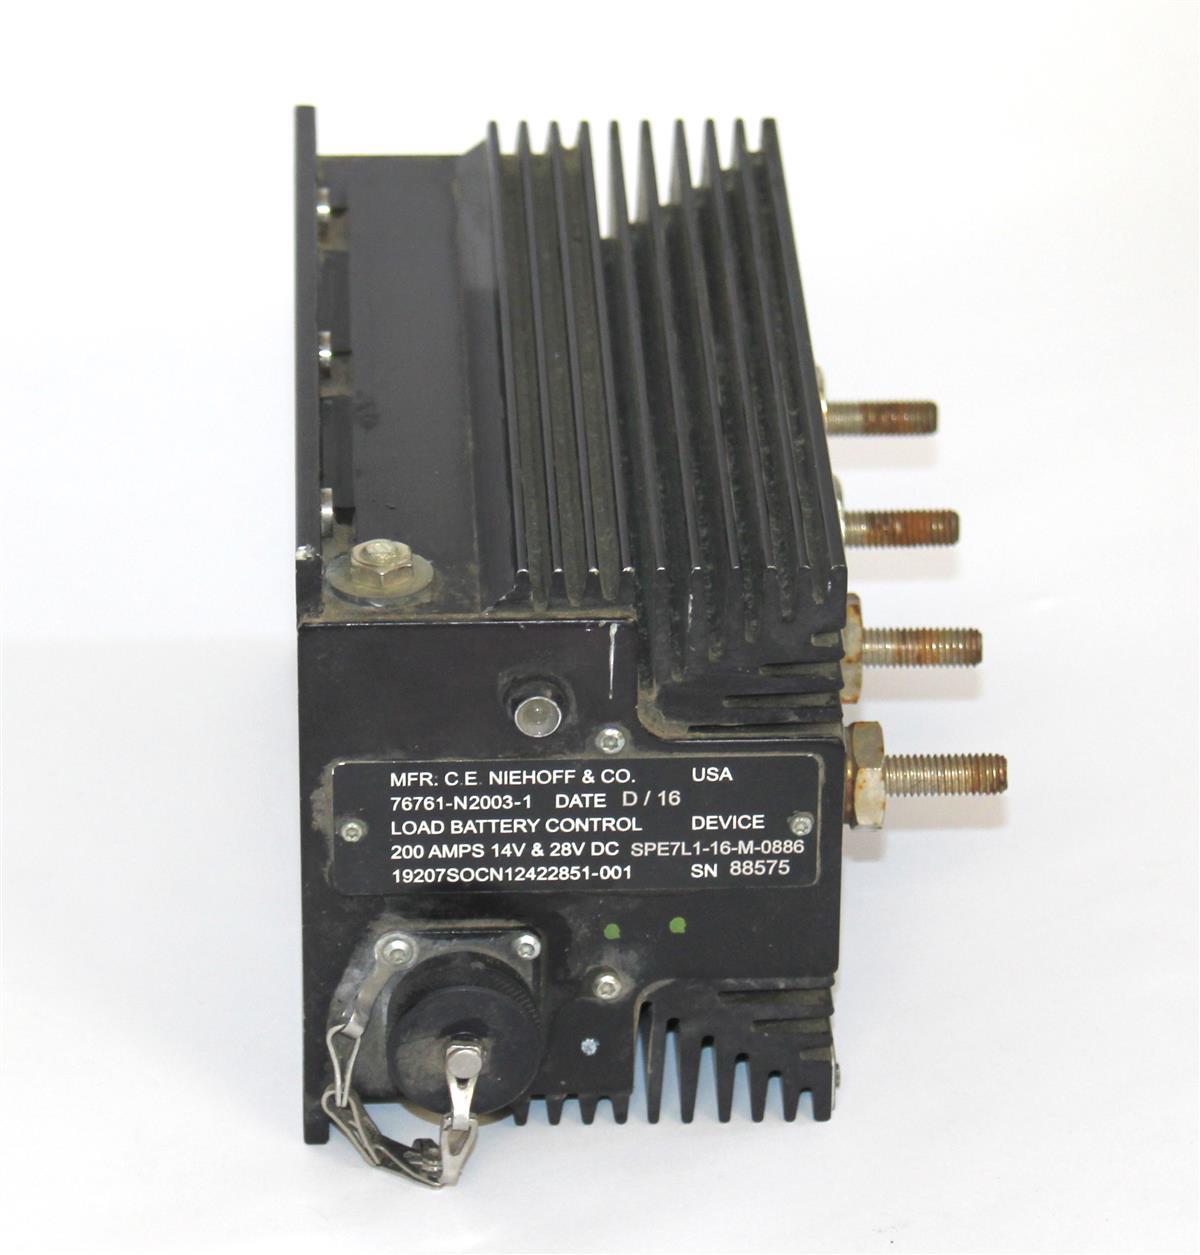 COM-5852 | COM-5852 CE Niehoff Co Load Battery Device (3).JPG